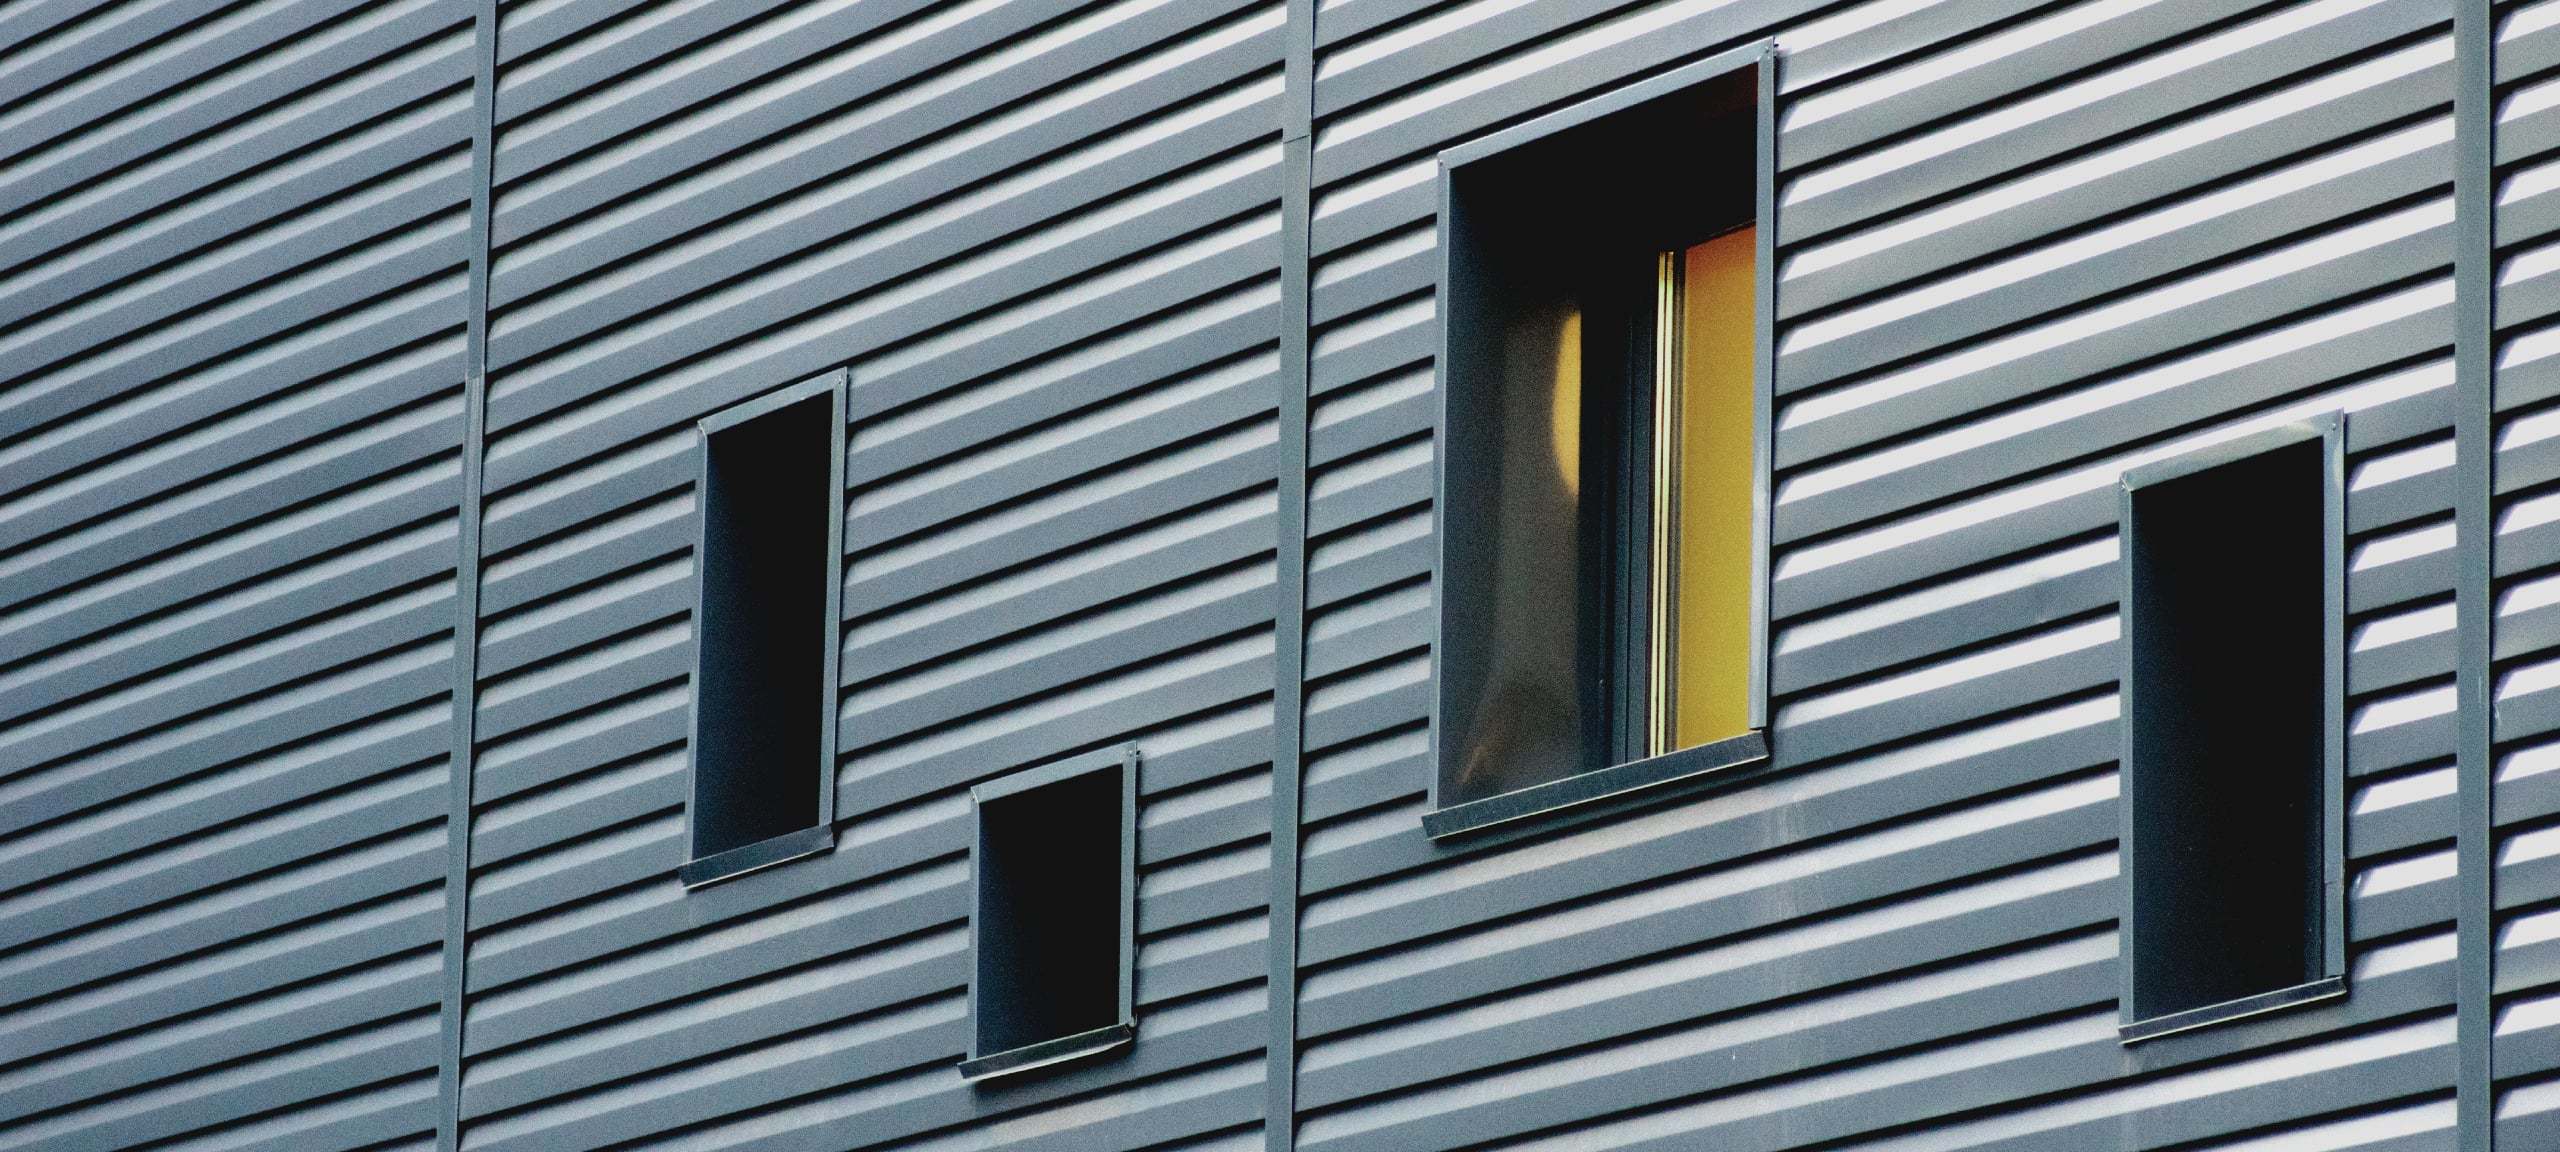 Gray abstract loft siding and small windows